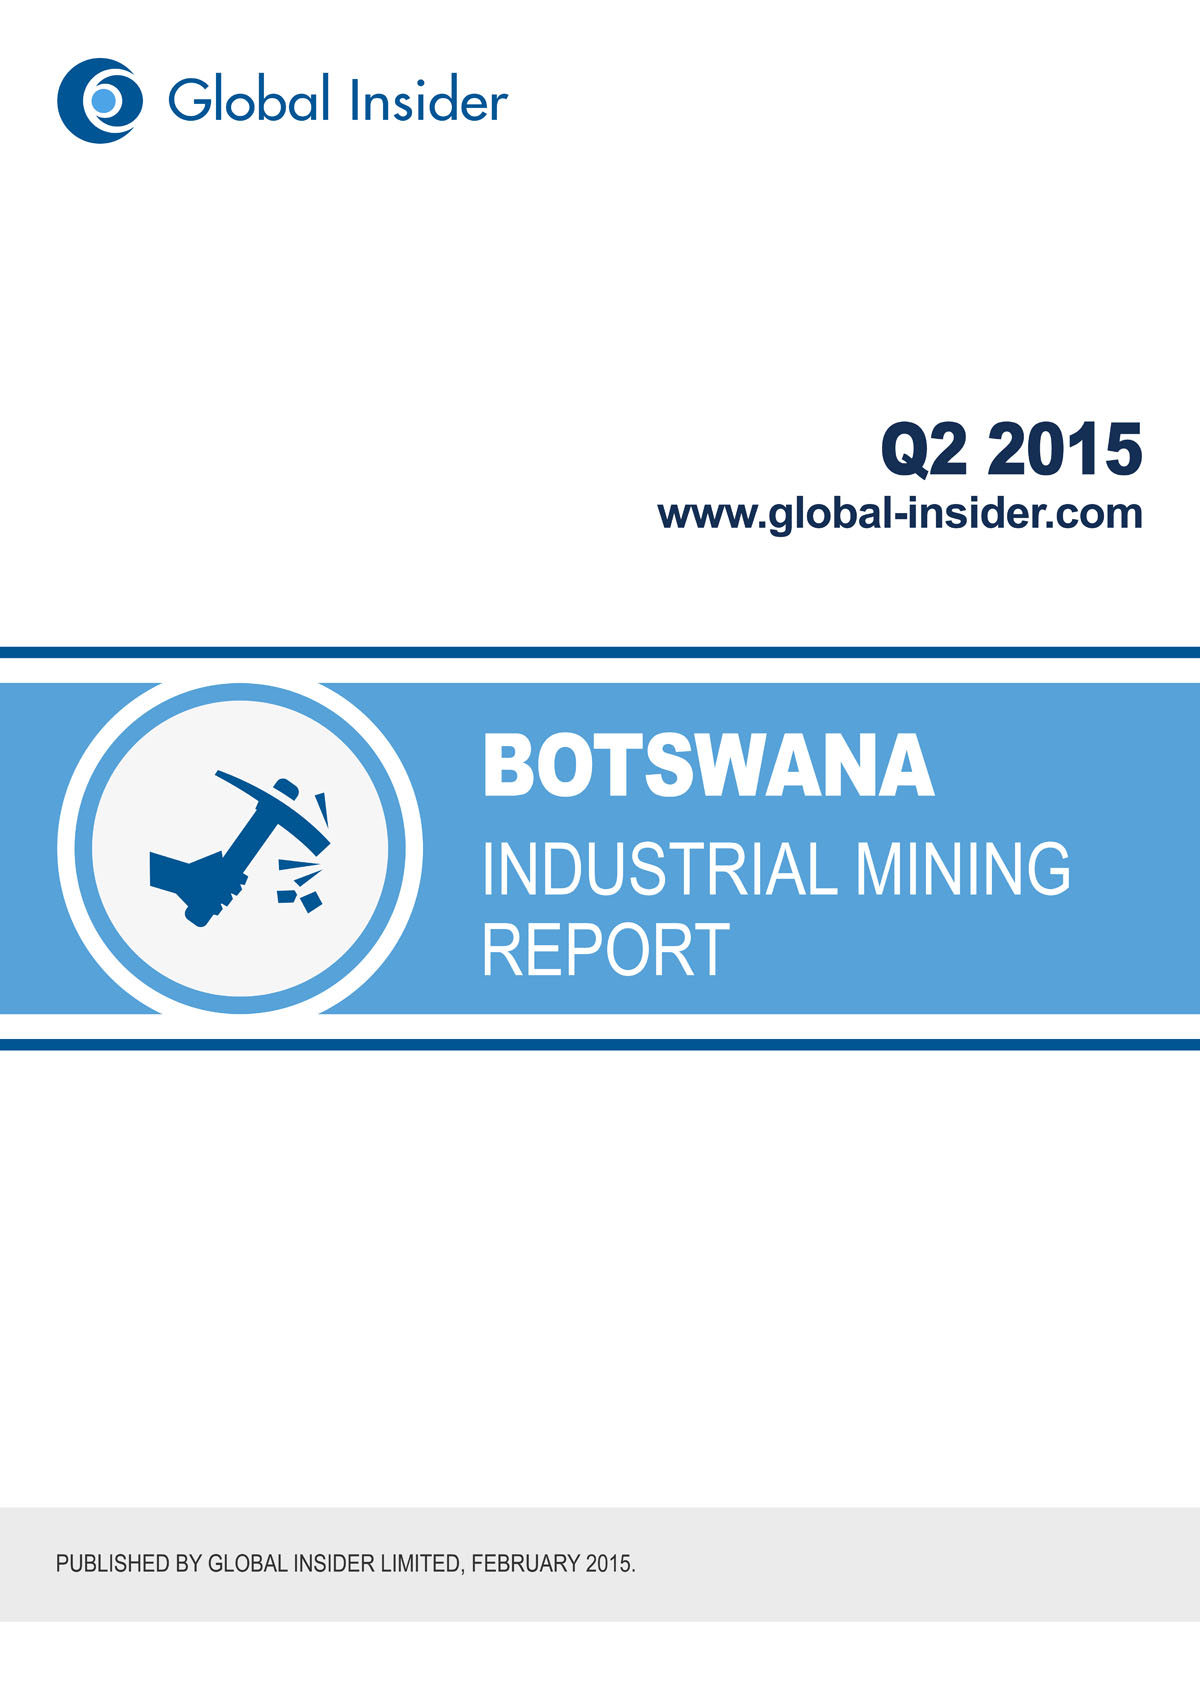 Botswana Industrial Mining